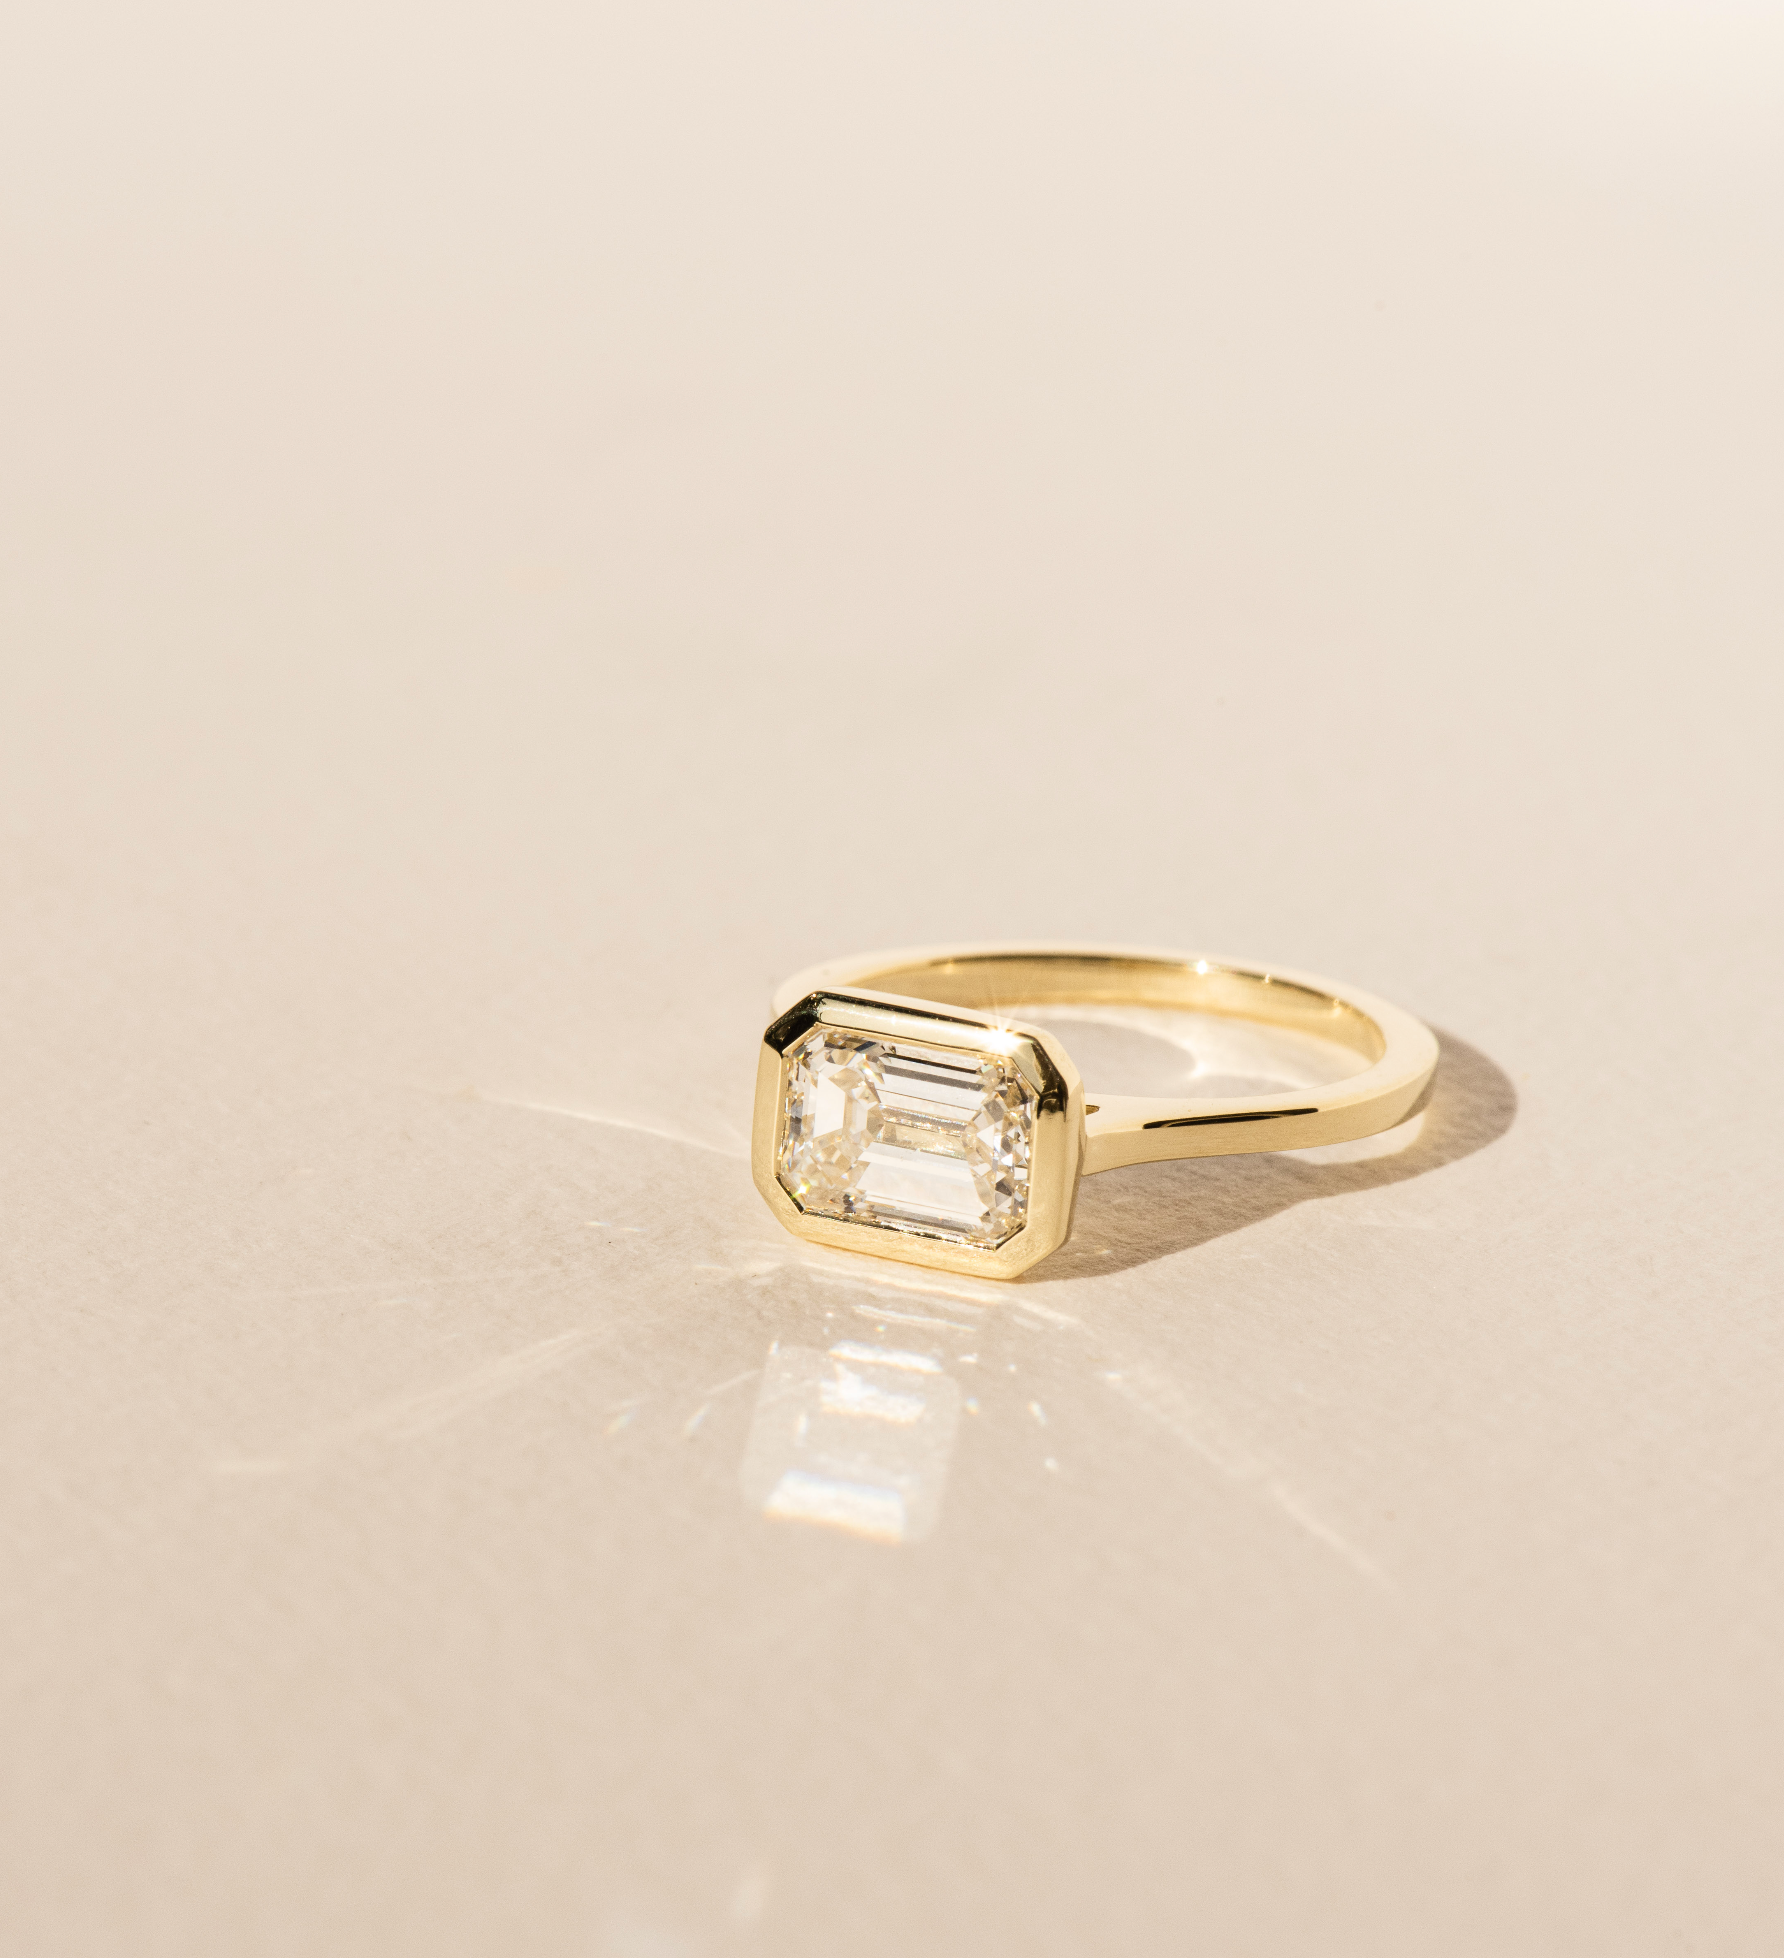 Dean & Dust Bespoke Jewellery Diamond Engagement Ring - Emerald Cut Diamond in Yellow Gold